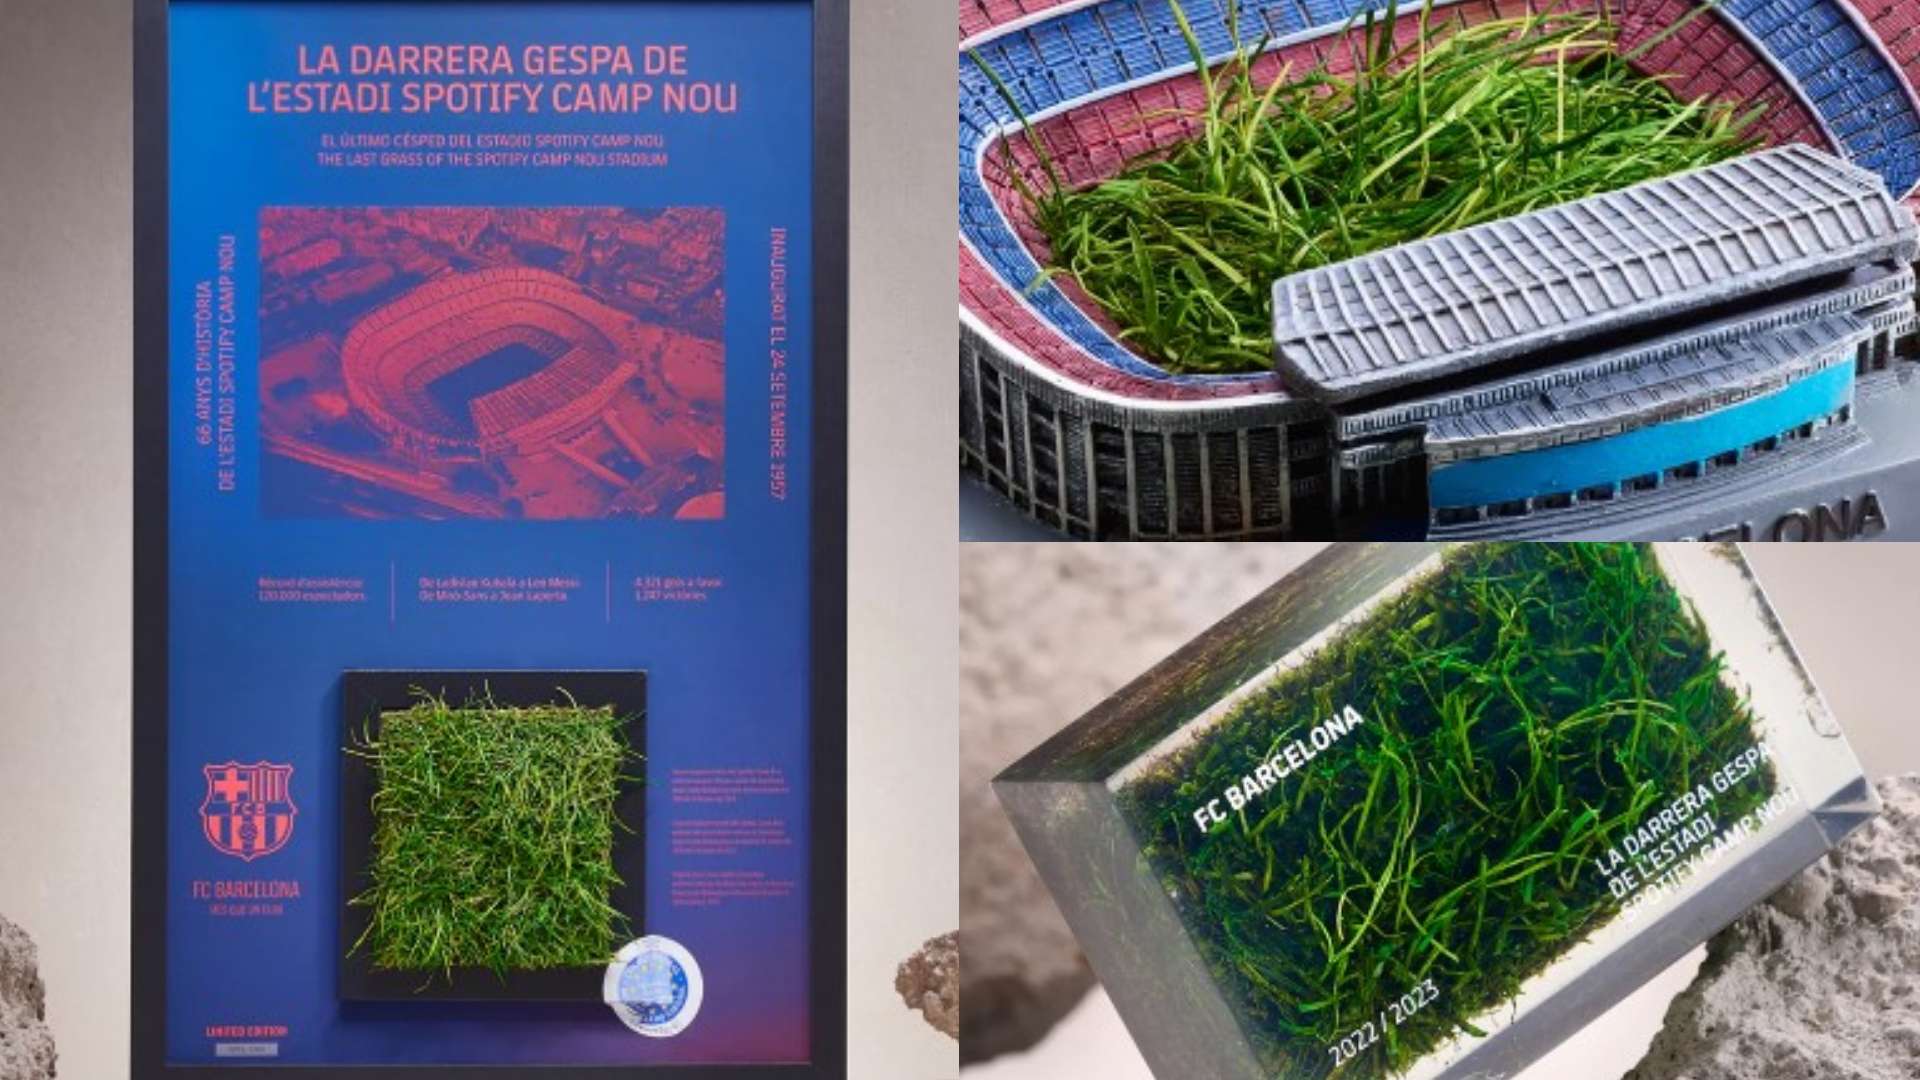 Barcelona Camp Nou grass